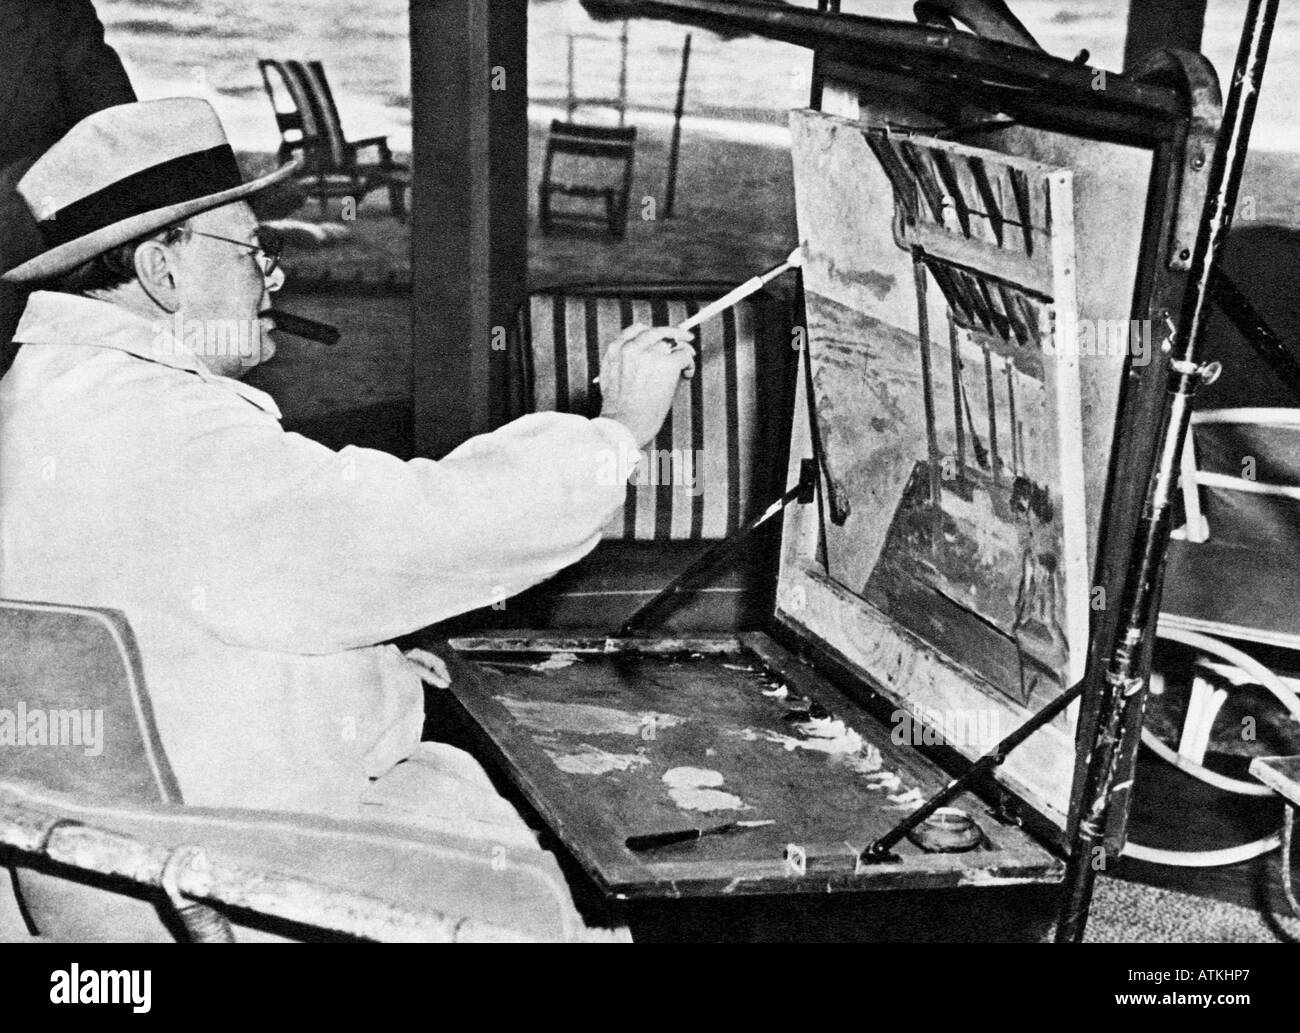 WINSTON CHURCHILL genießen seine Malerei Hobby im Surf Club Miami in den USA im Februar 1946 Stockfoto